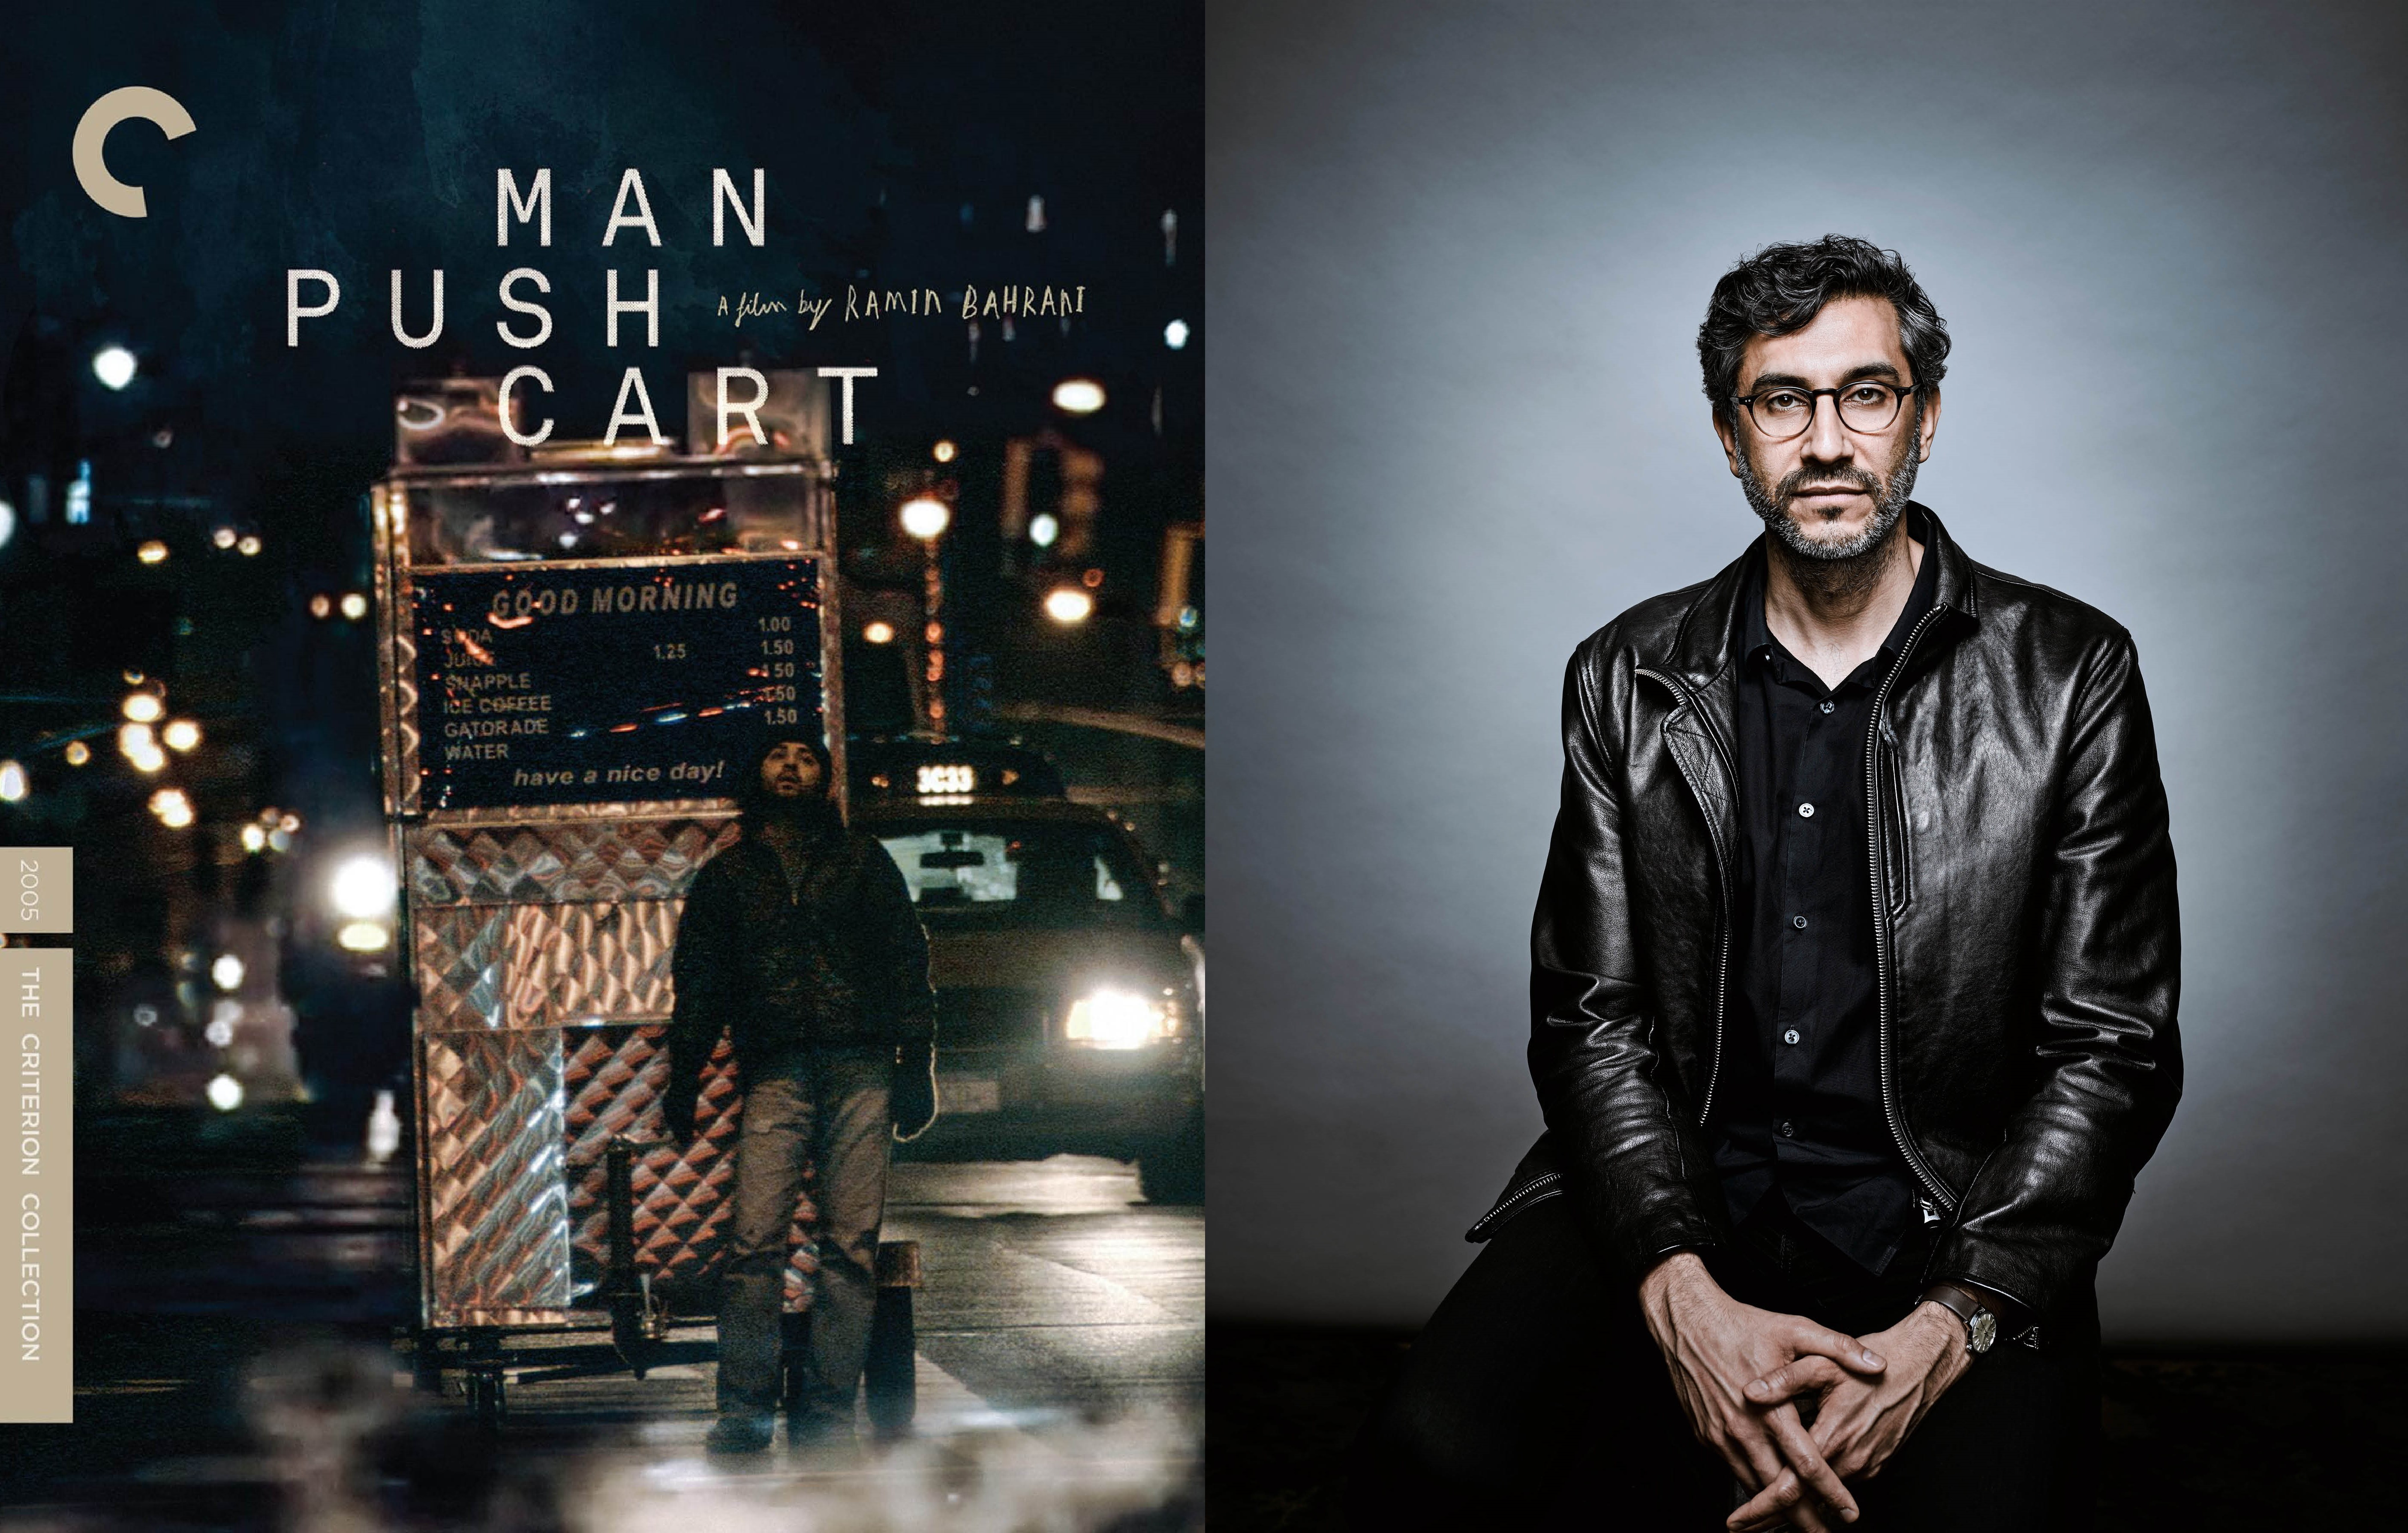 From left to right: Man Push Cart (2005) movie poster, headshot of Ramin Bahrani